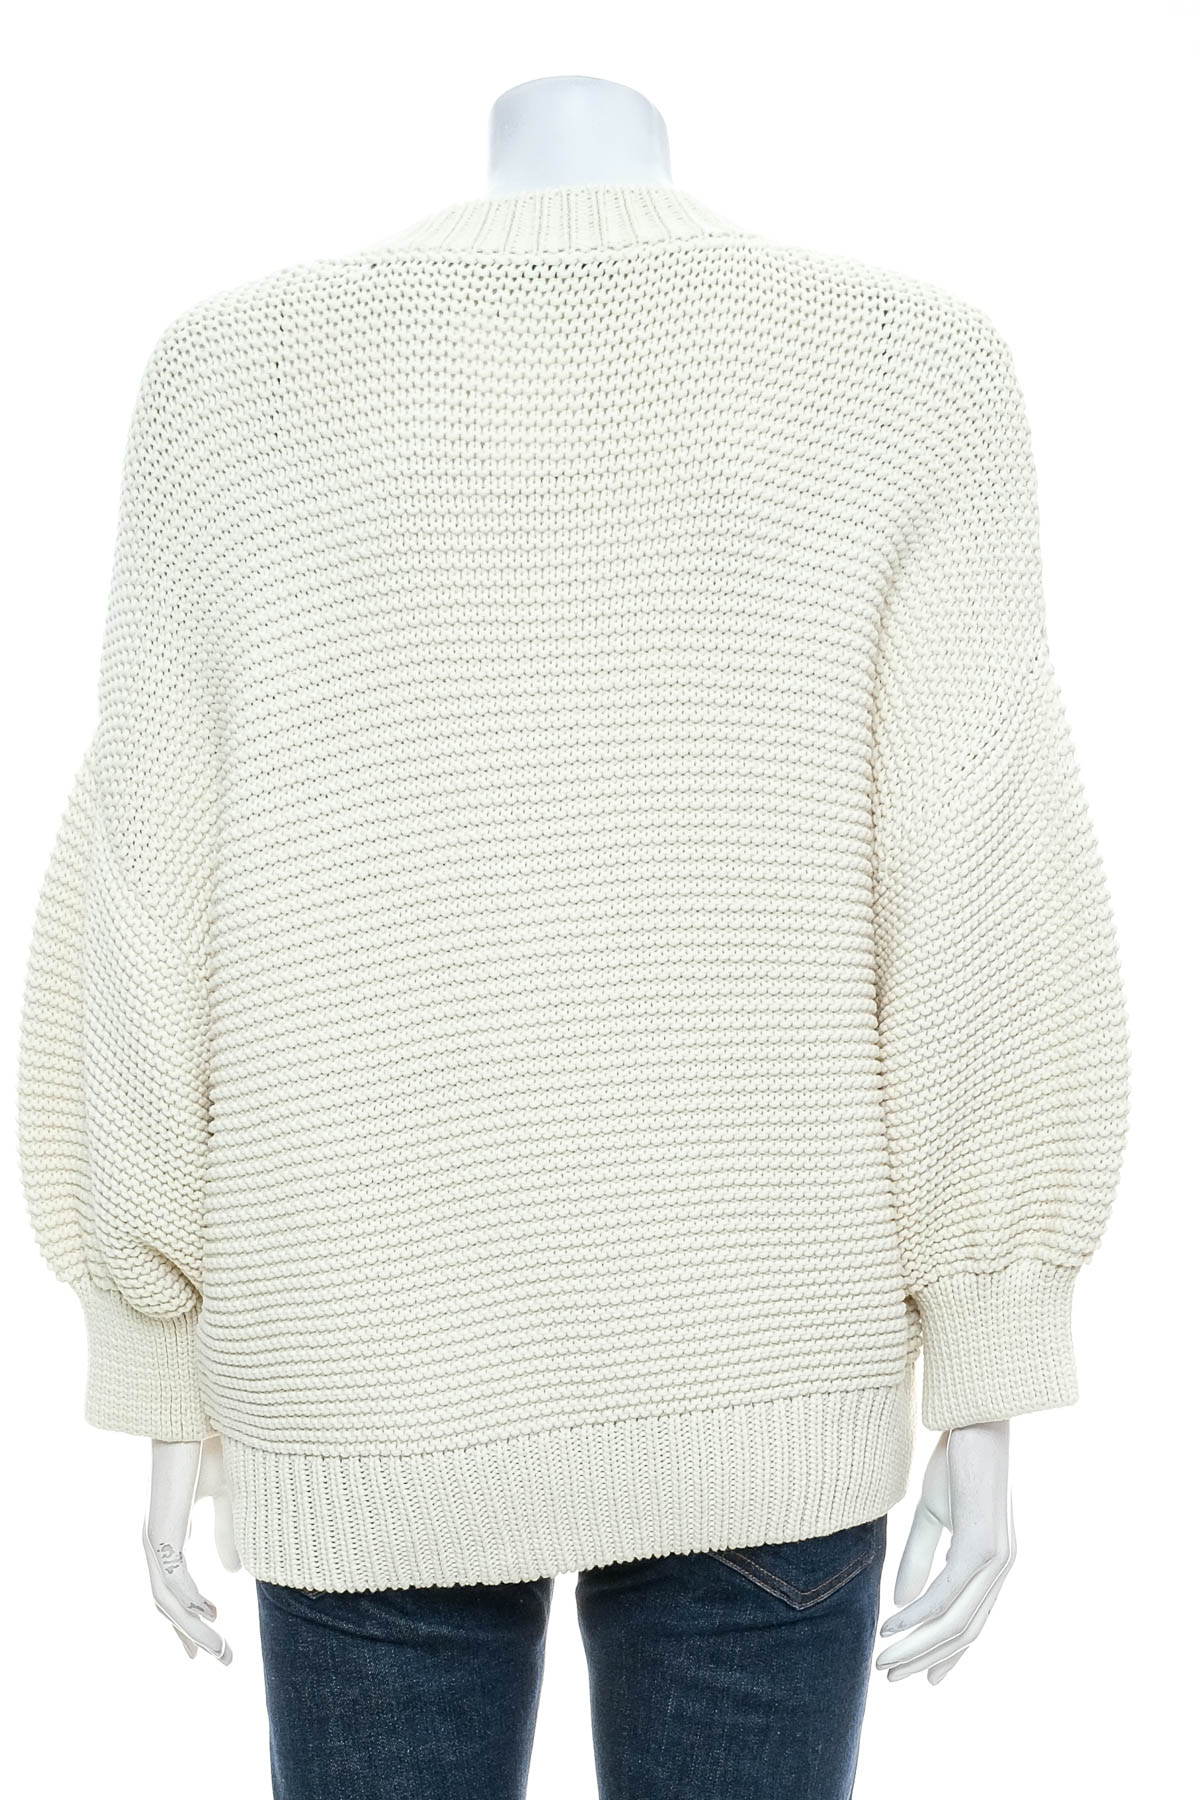 Women's sweater - MNG SUIT - 1